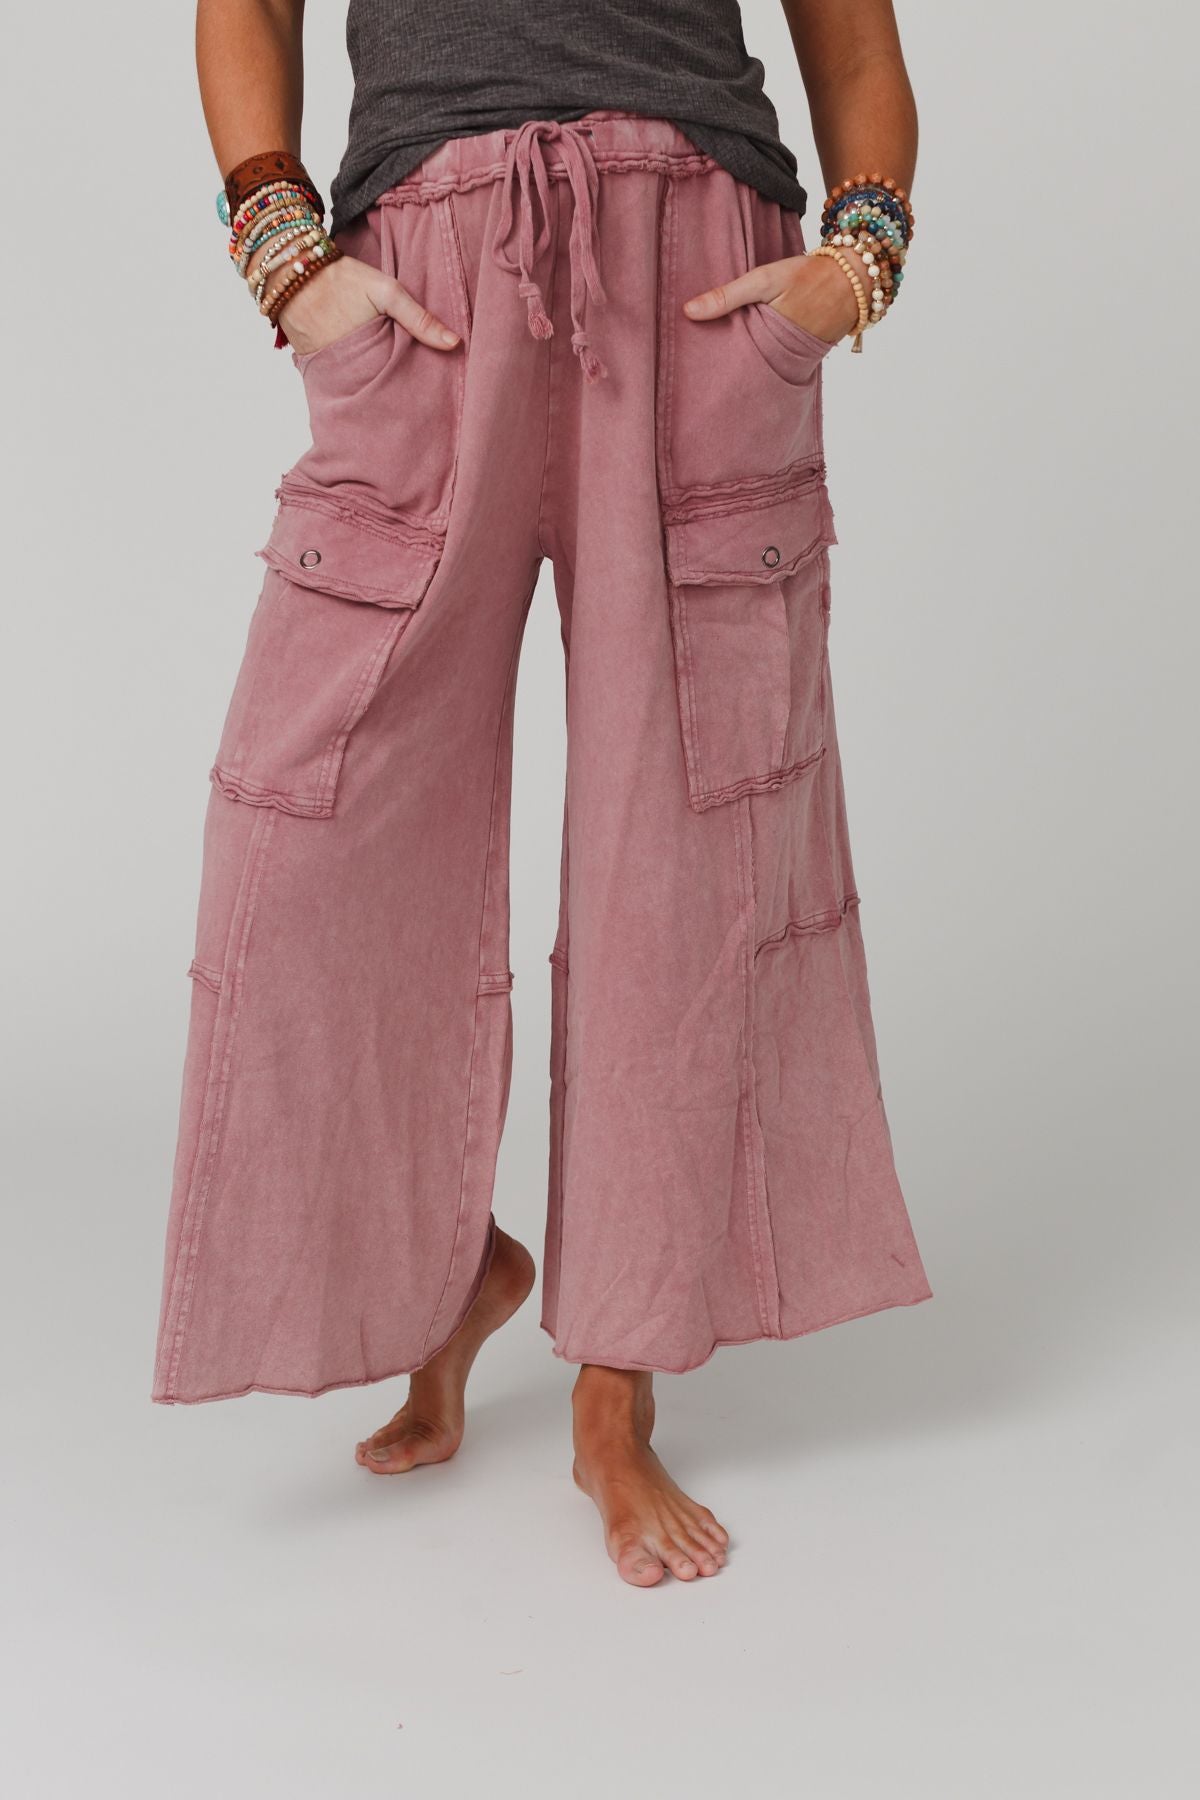 Burgundy Contrast Stitch Girls Cargo Pants | Hot Topic